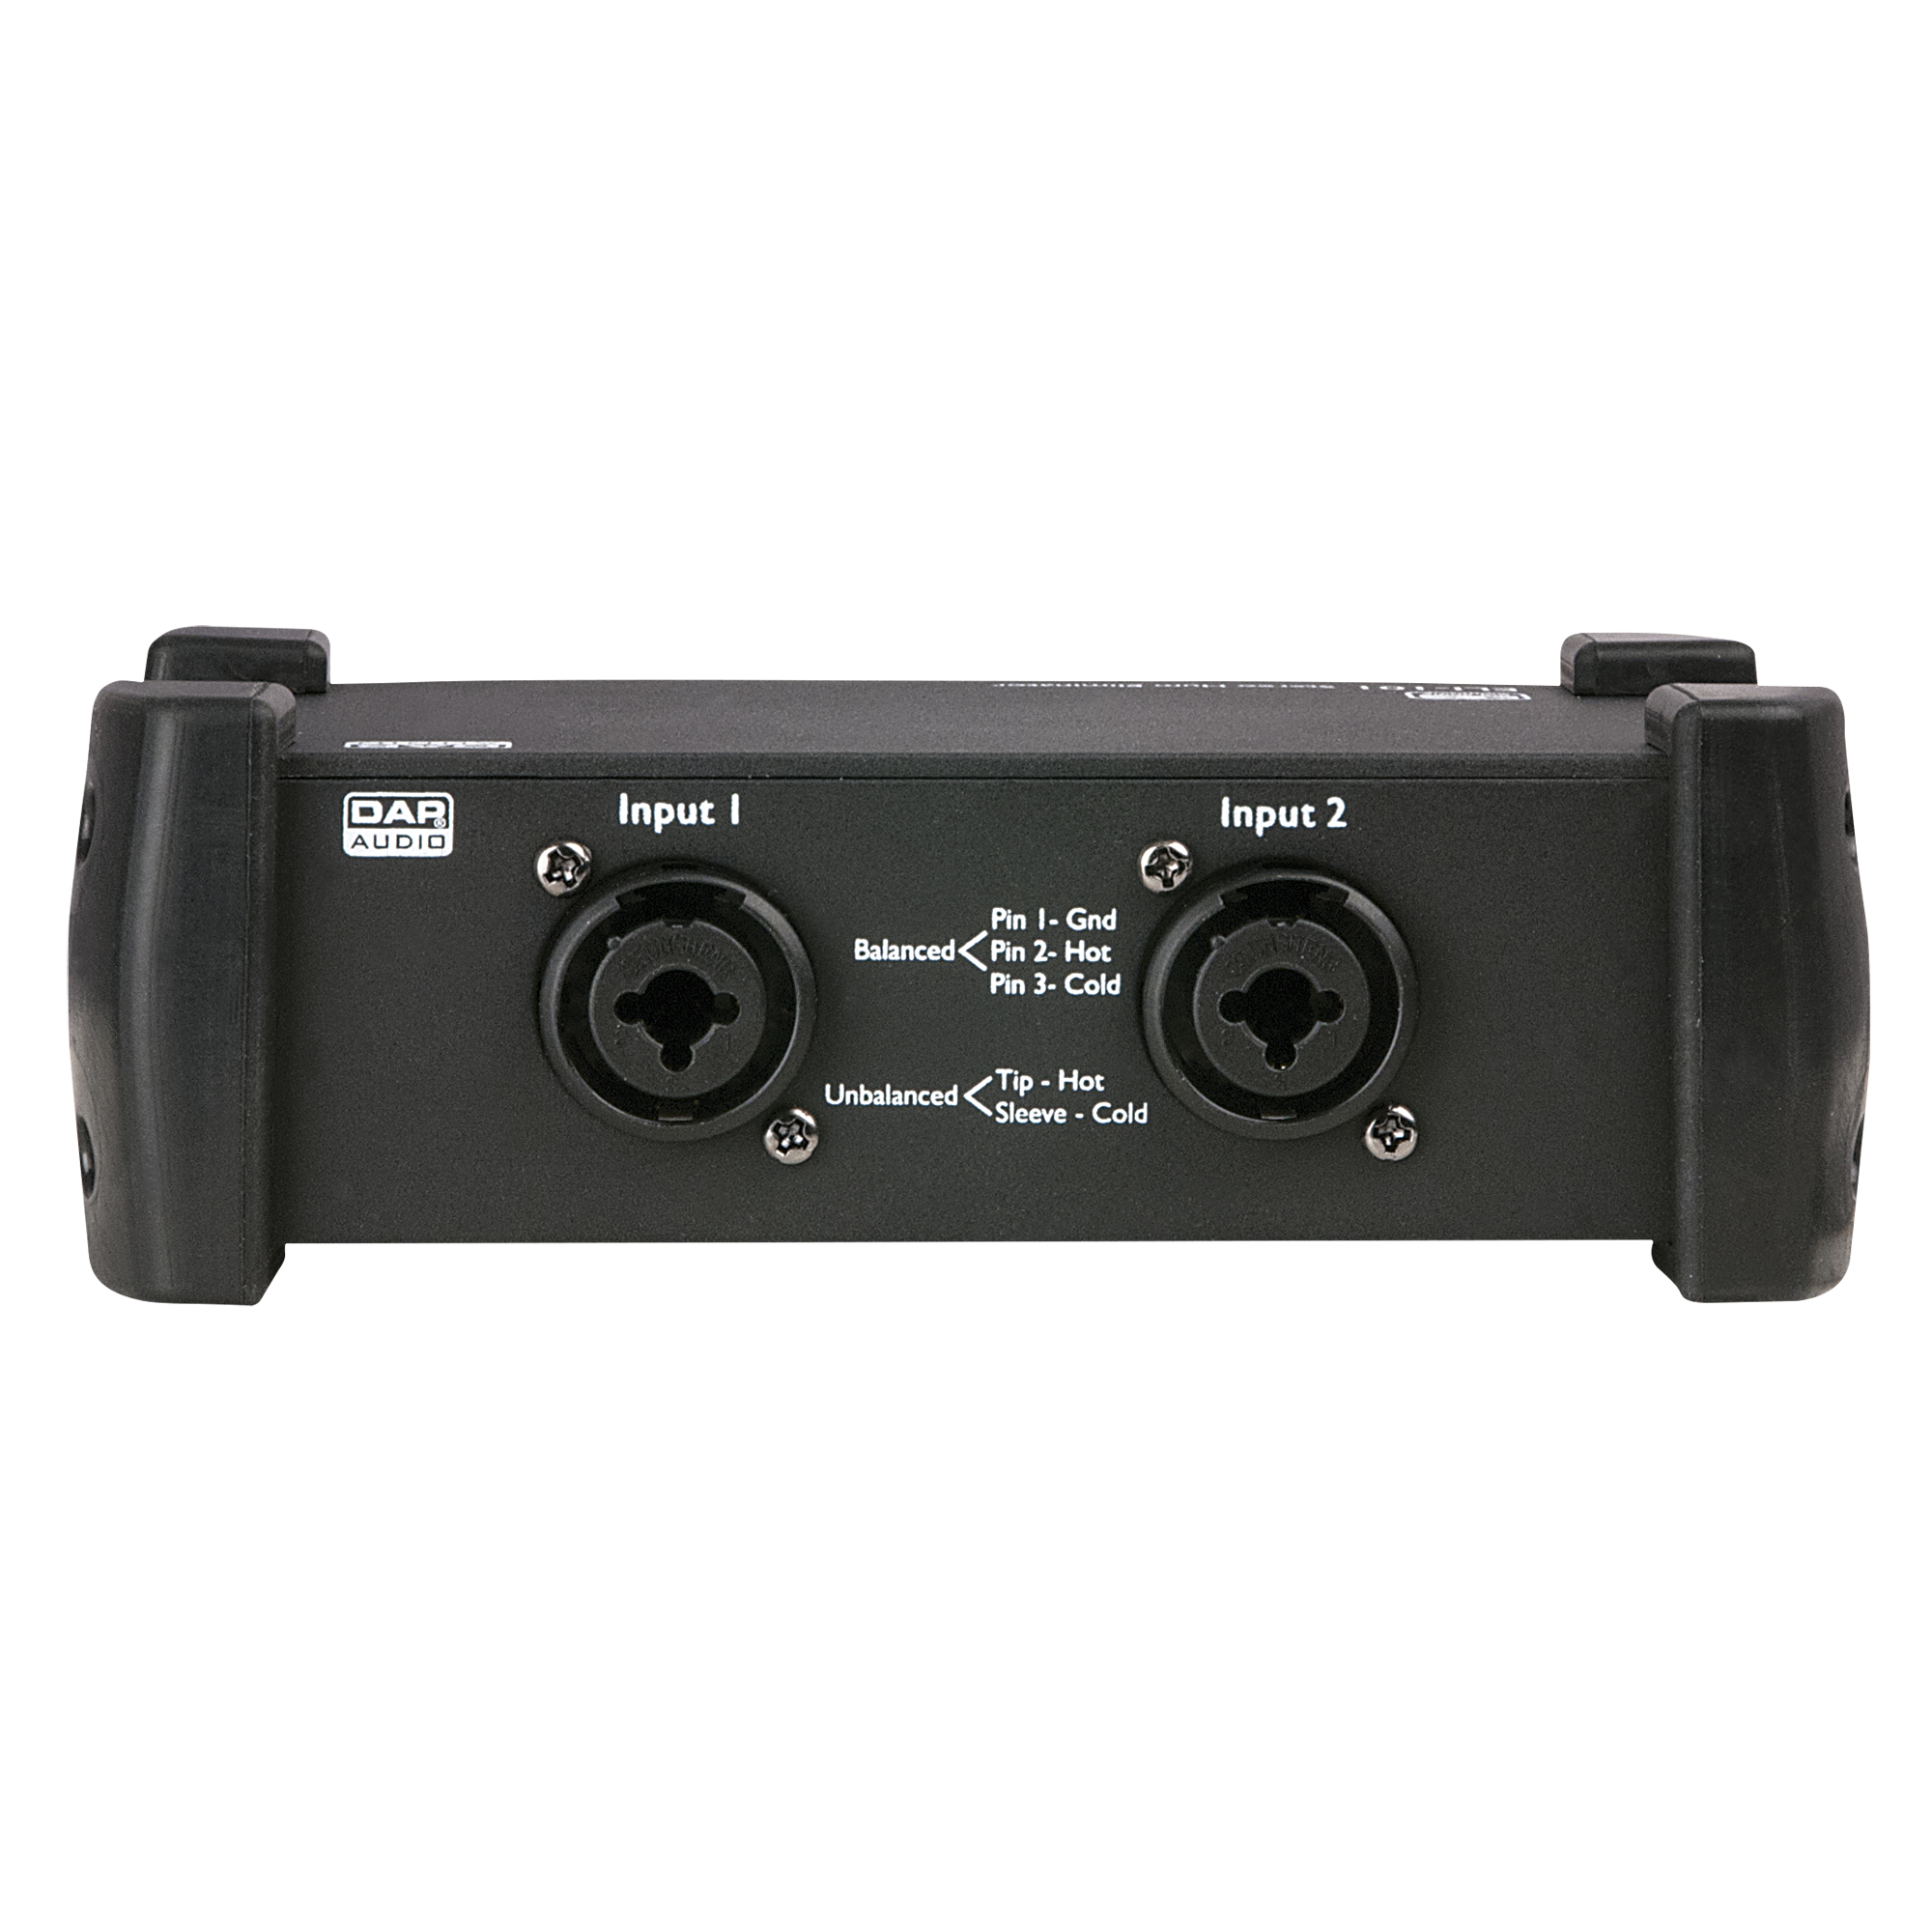 DAP ELI-101 Stereo-Brumm Entferner